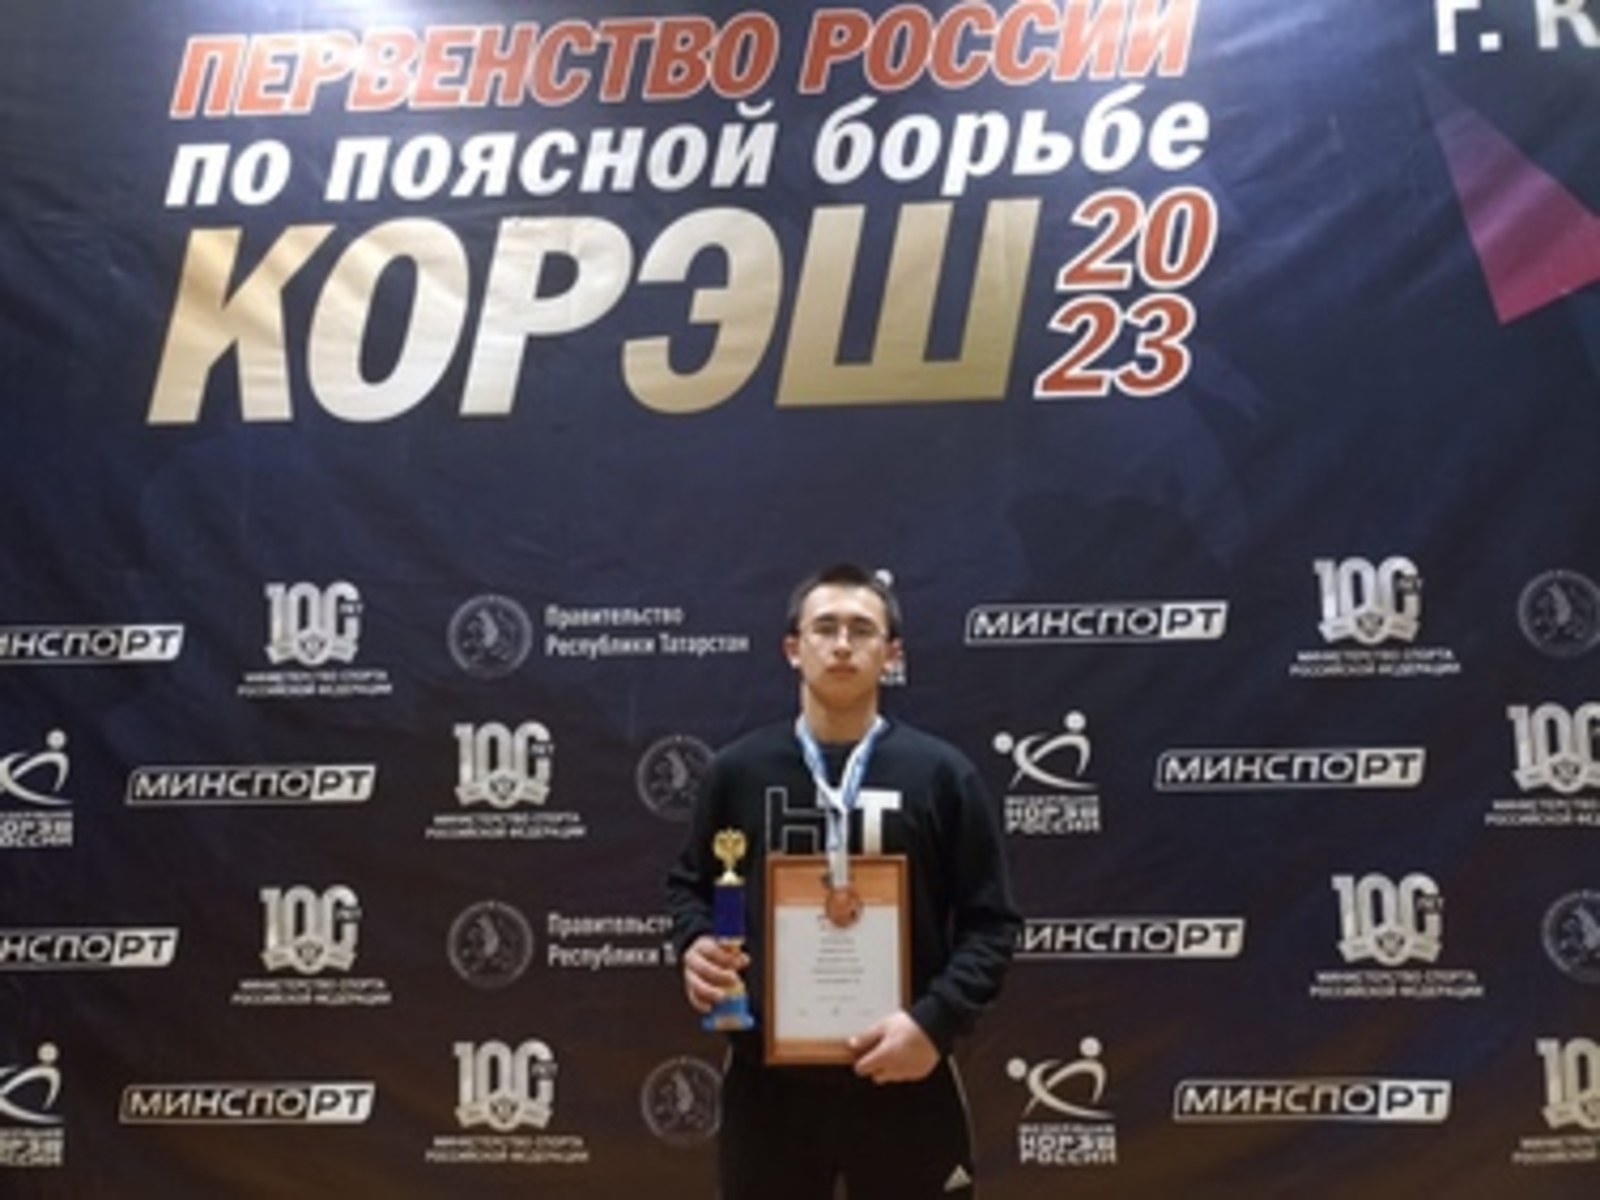 Фанур Истамбаев - призер первенства России по корэш